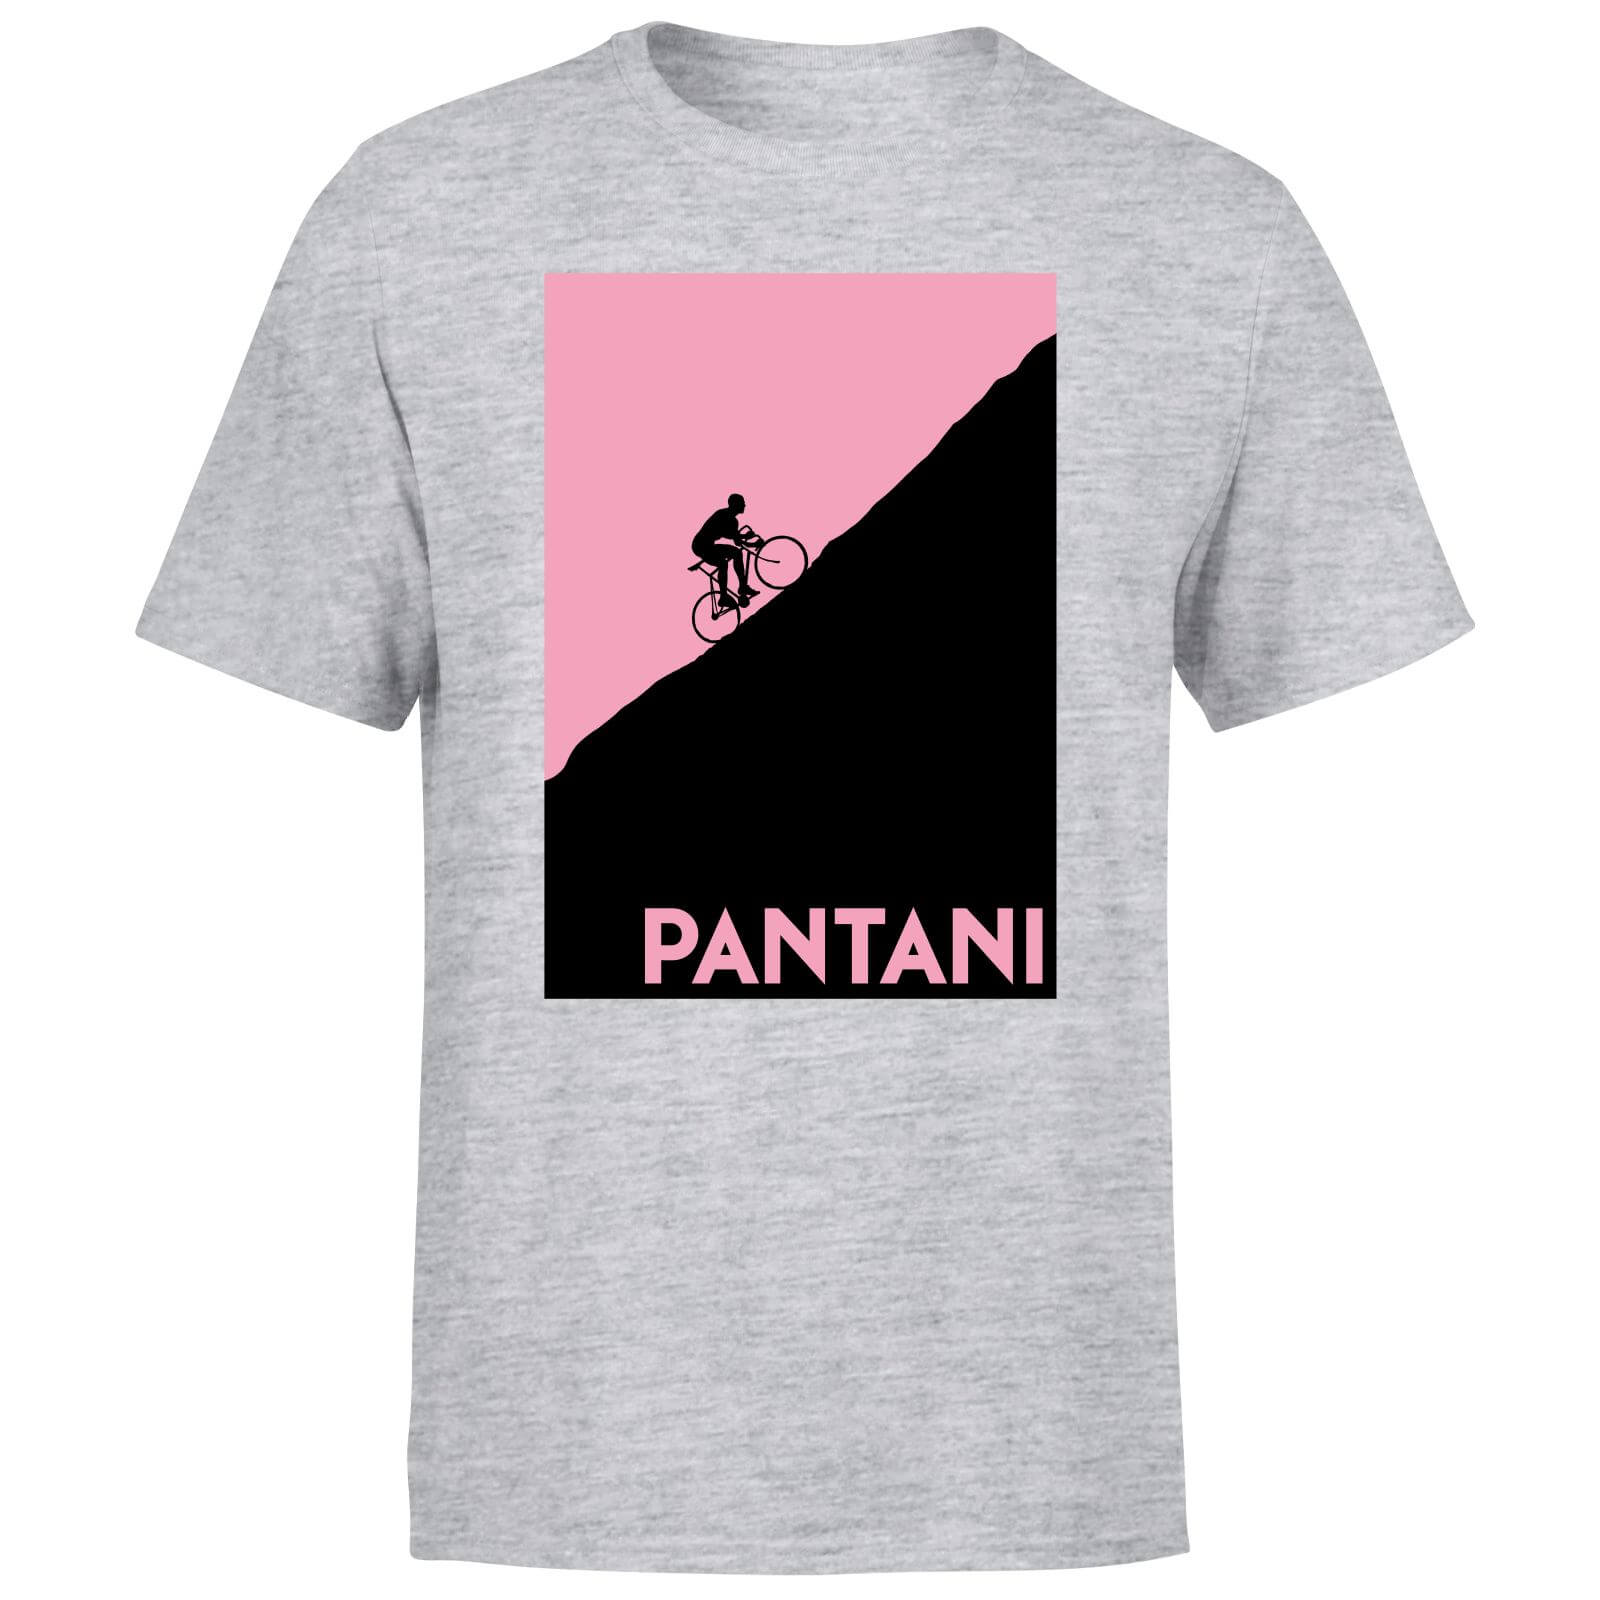 Pantani Men's T-Shirt - Grey - L - Grey